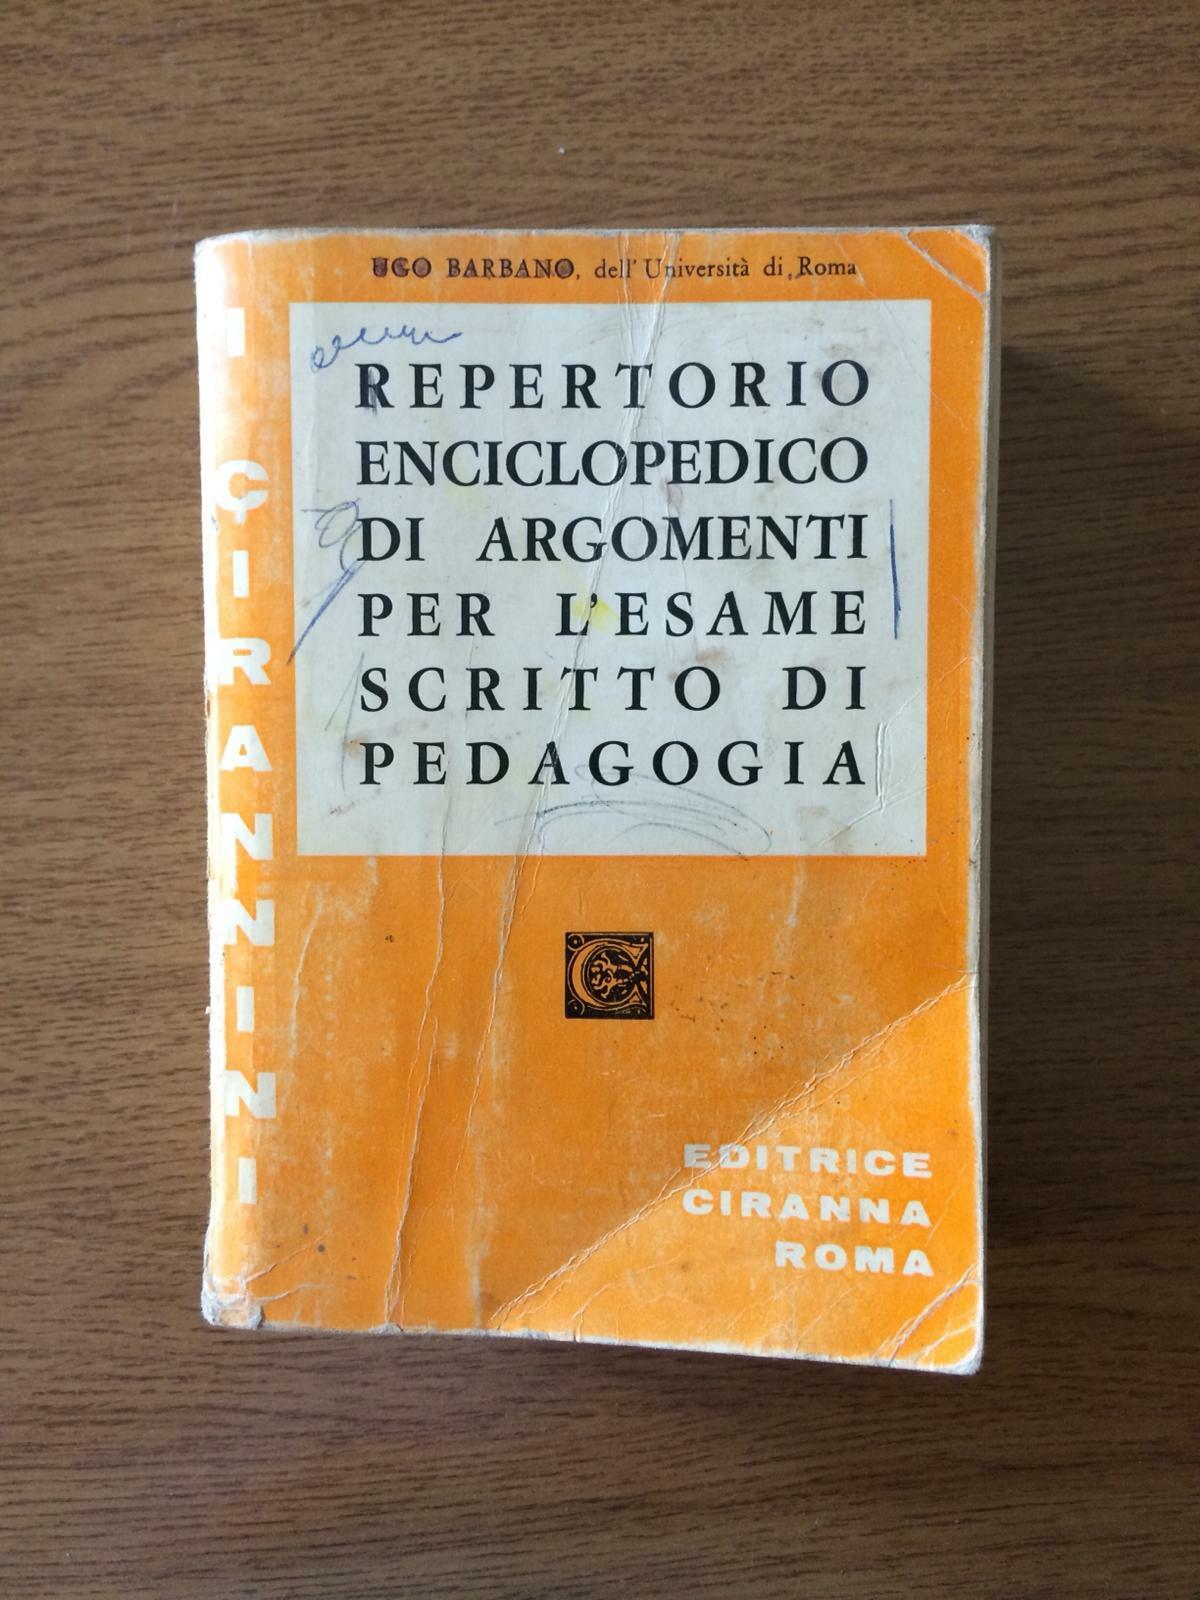 Reportorio enciclopedico... - Ugo Barbano - Ciranna Roma - 1972 - AR